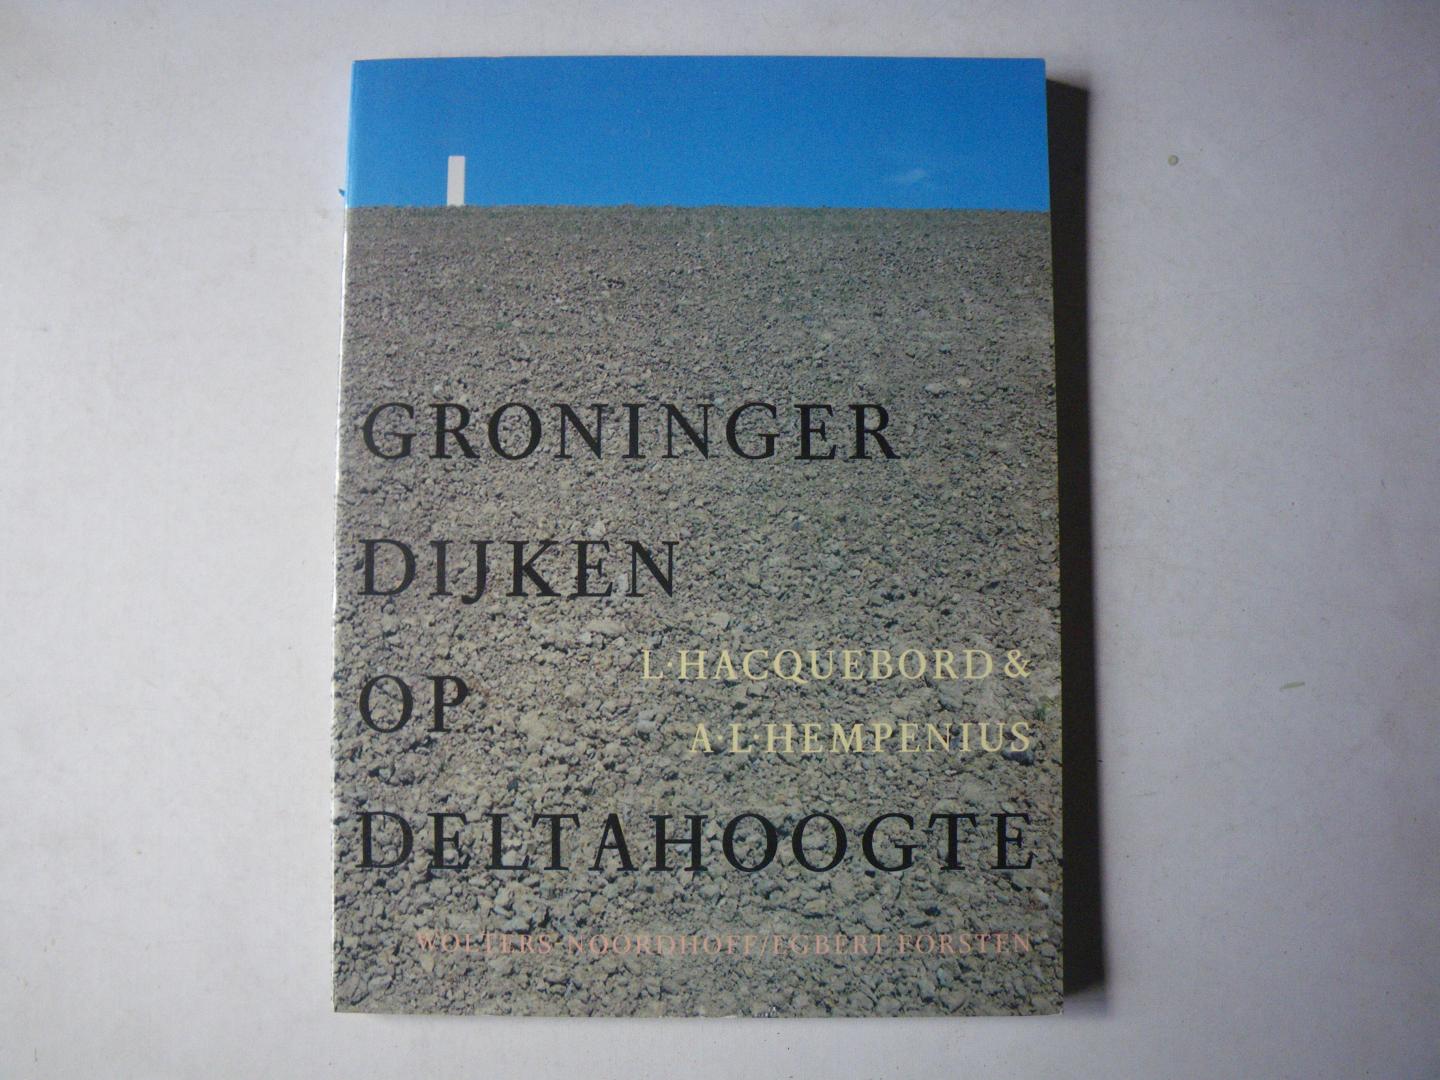 Hacquebord, L. en Hempenius, A.L. - Groninger dijken op deltahoogte